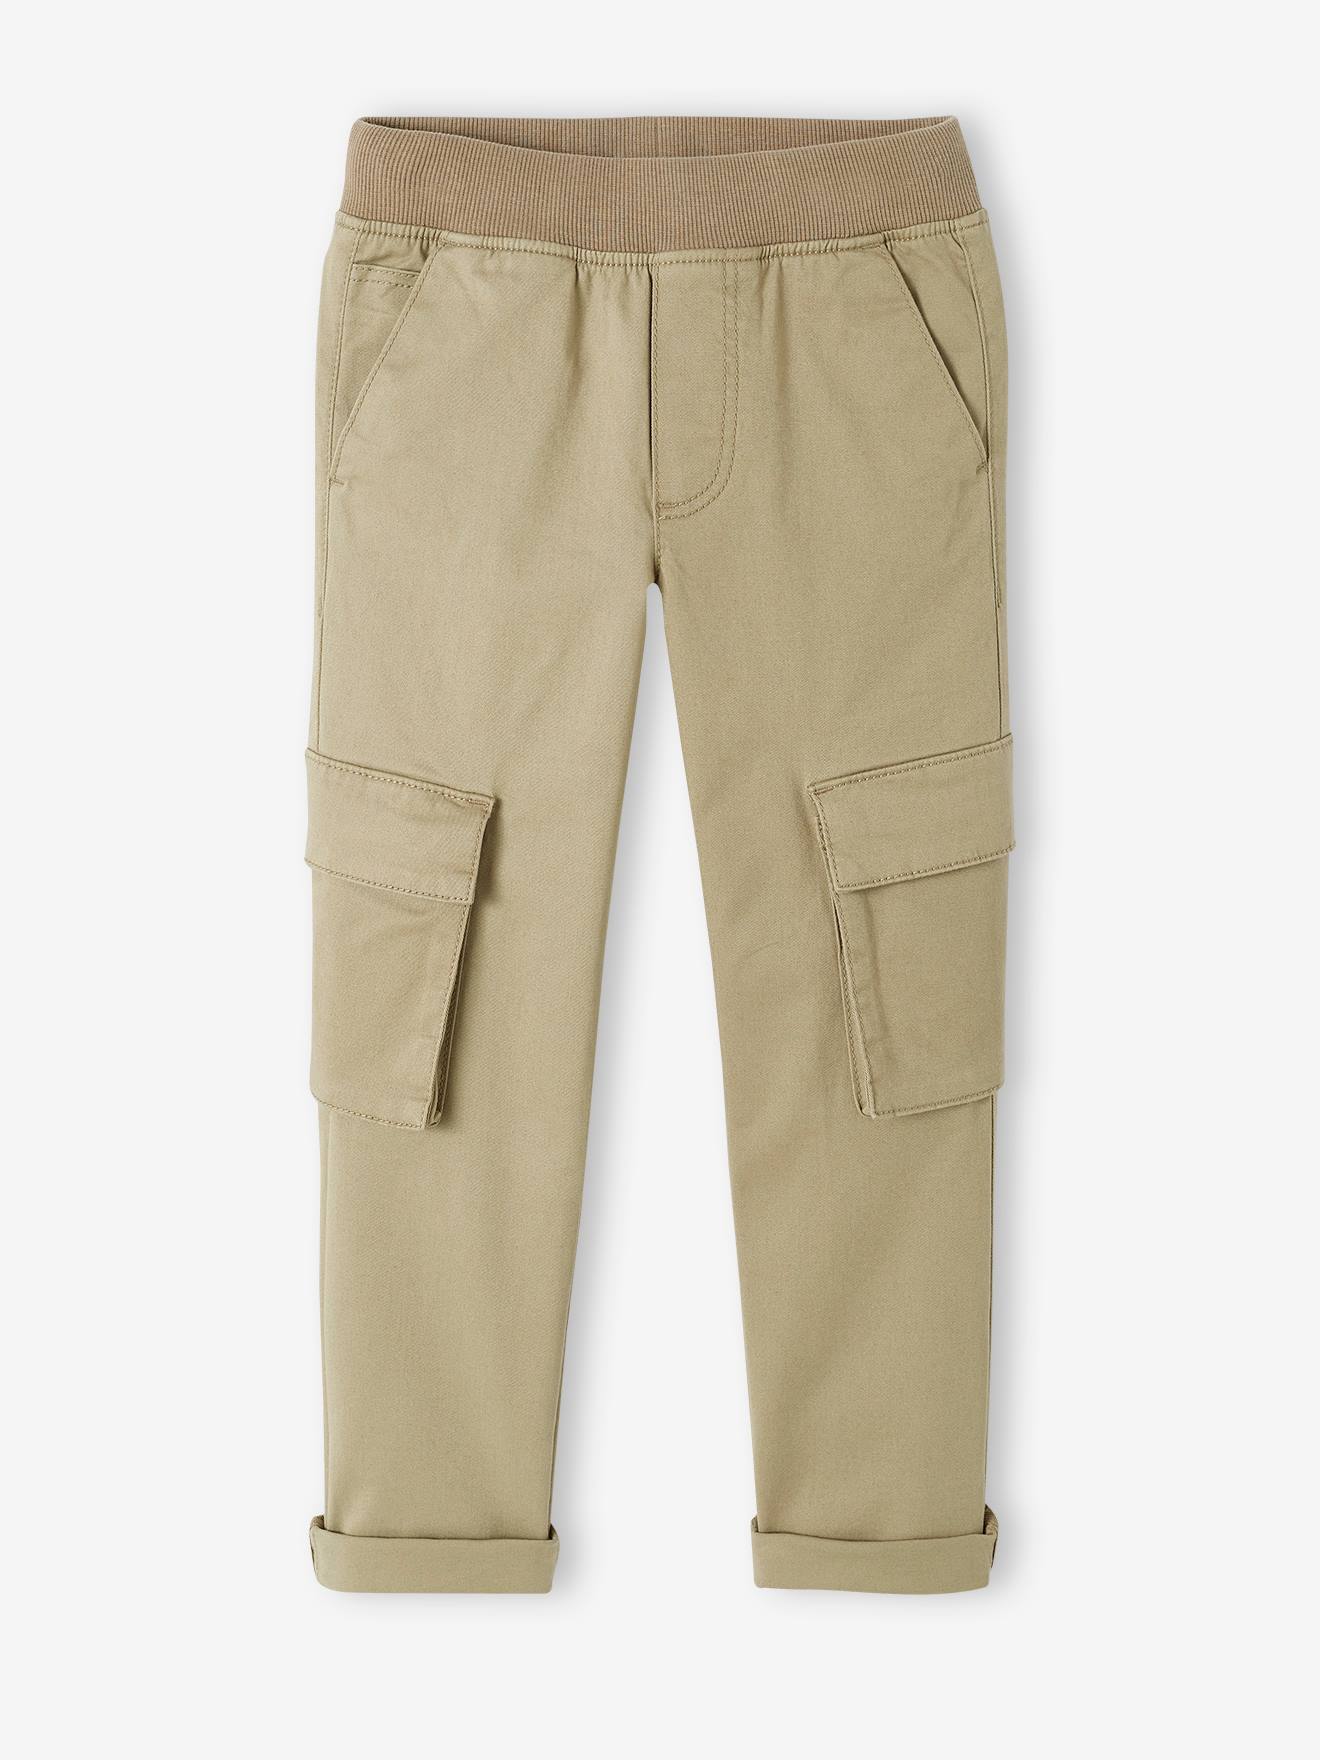 NARROW Hip Morphologik Cargo Trousers, Pull-Ons, for Boys bronze